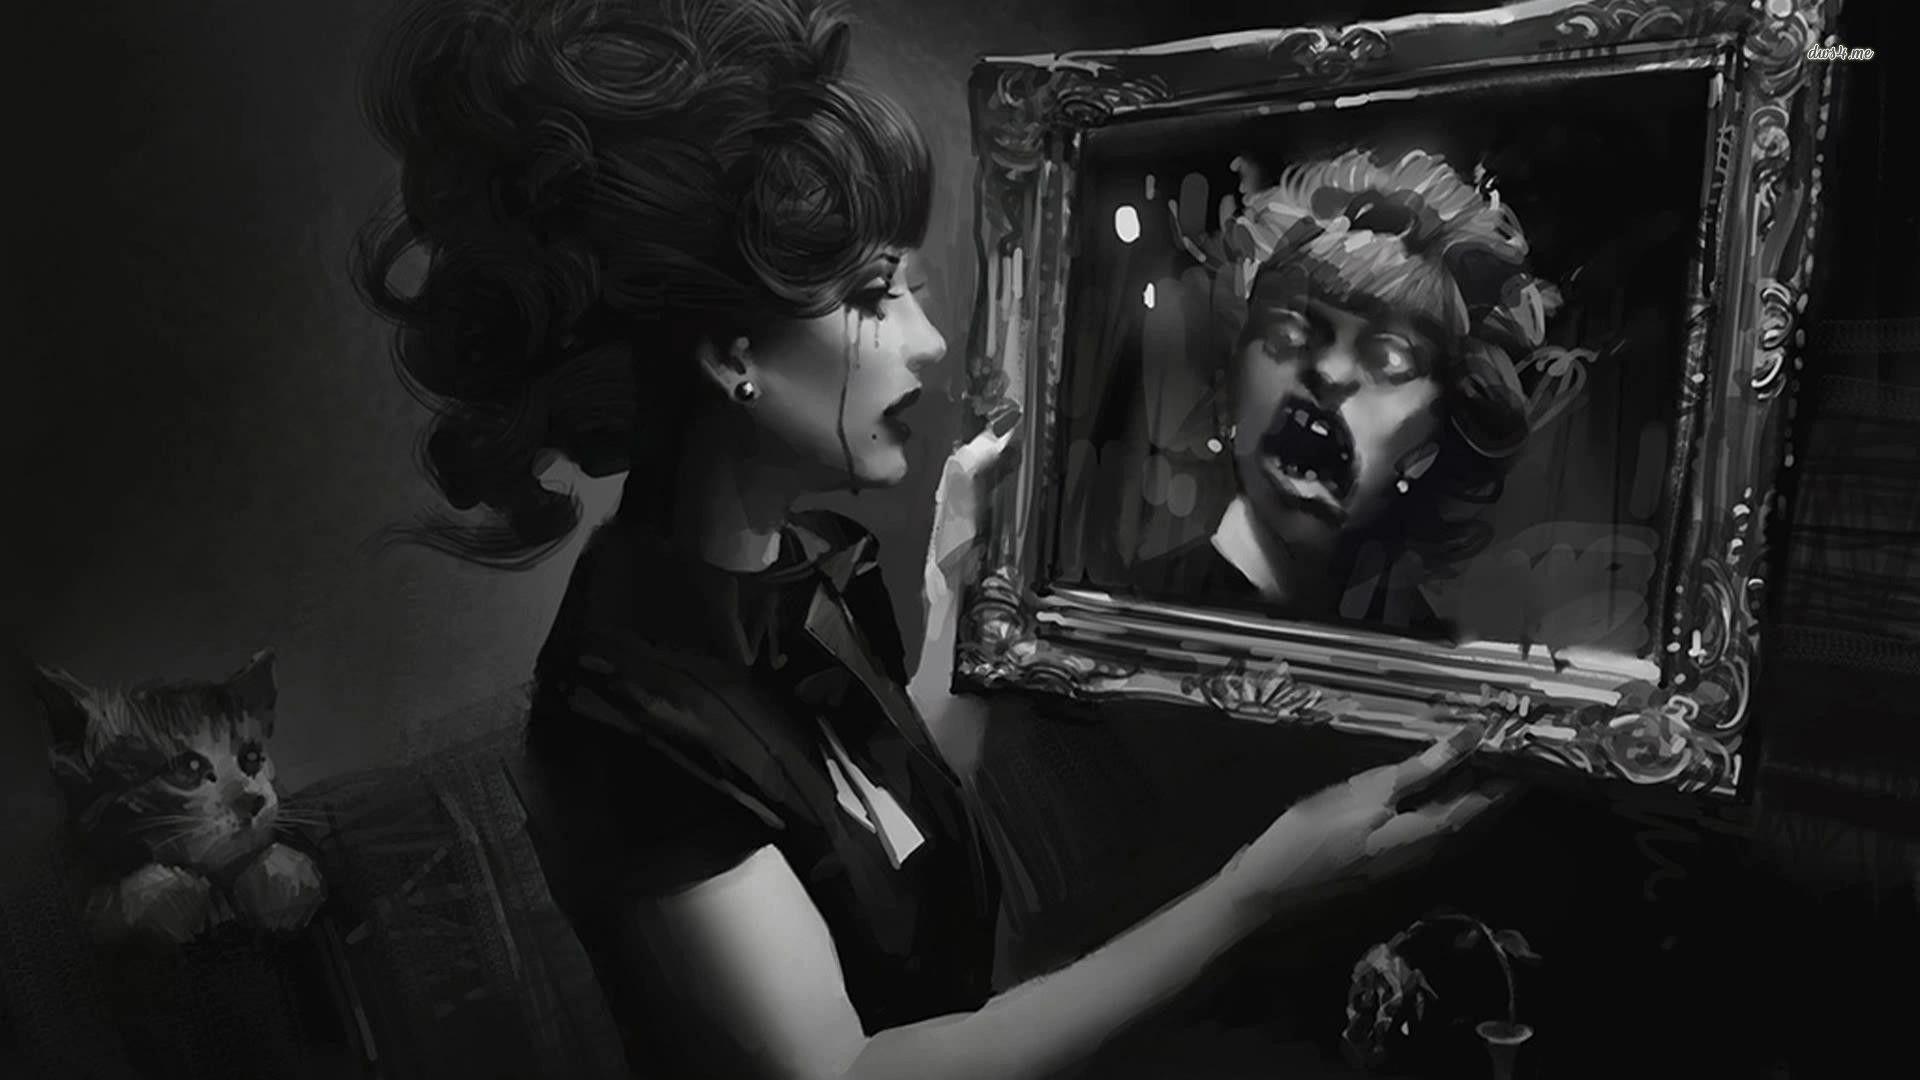 mirror reflection art image. mirror tat. Reflection